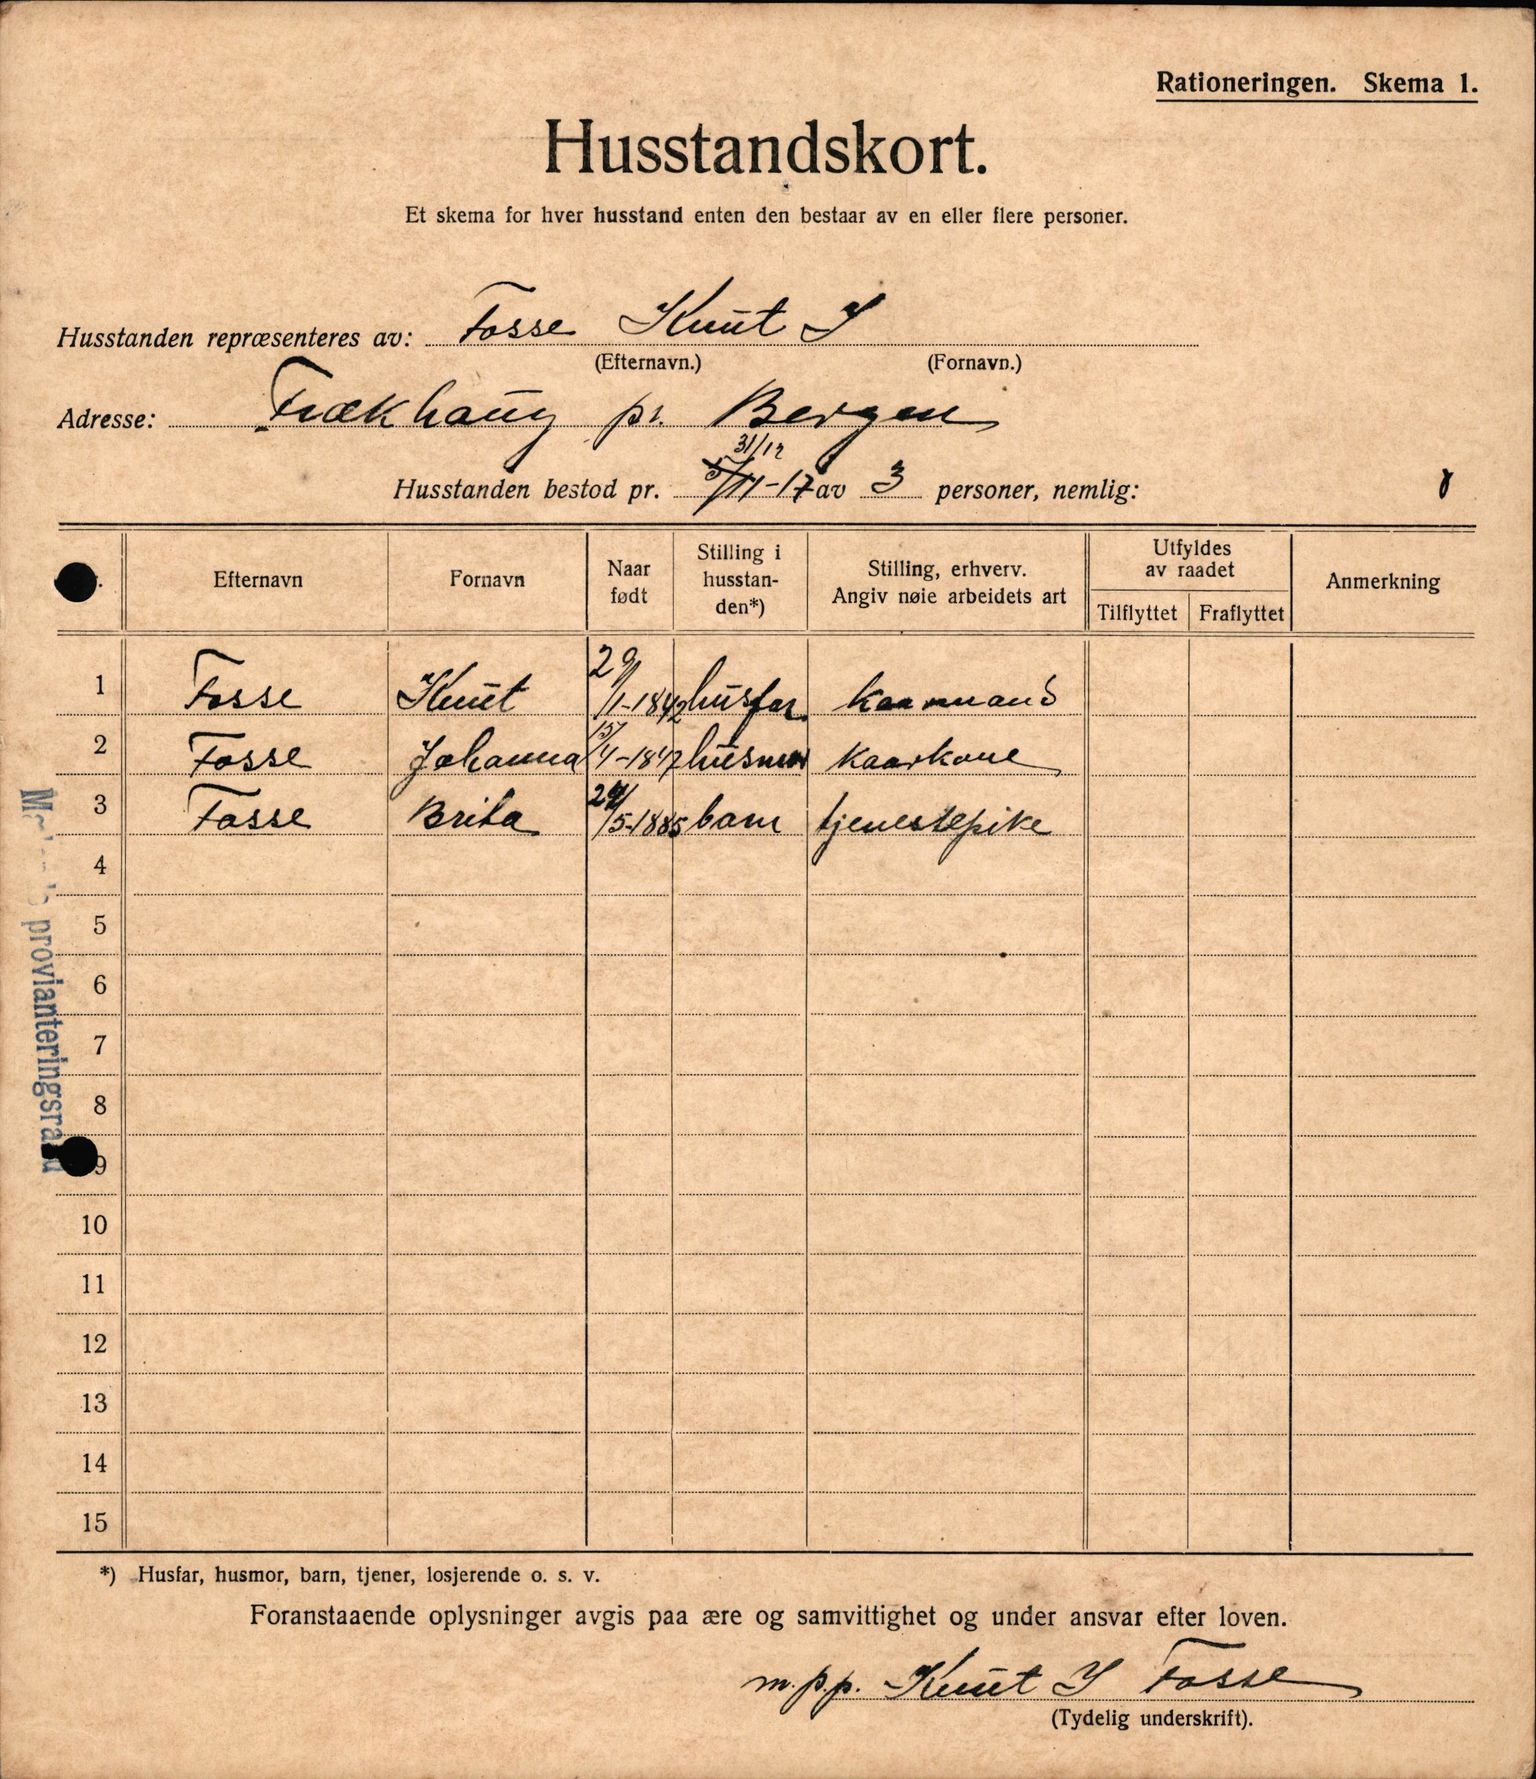 IKAH, Meland kommune, Provianteringsrådet, Husstander per 01.11.1917, 1917-1918, p. 222